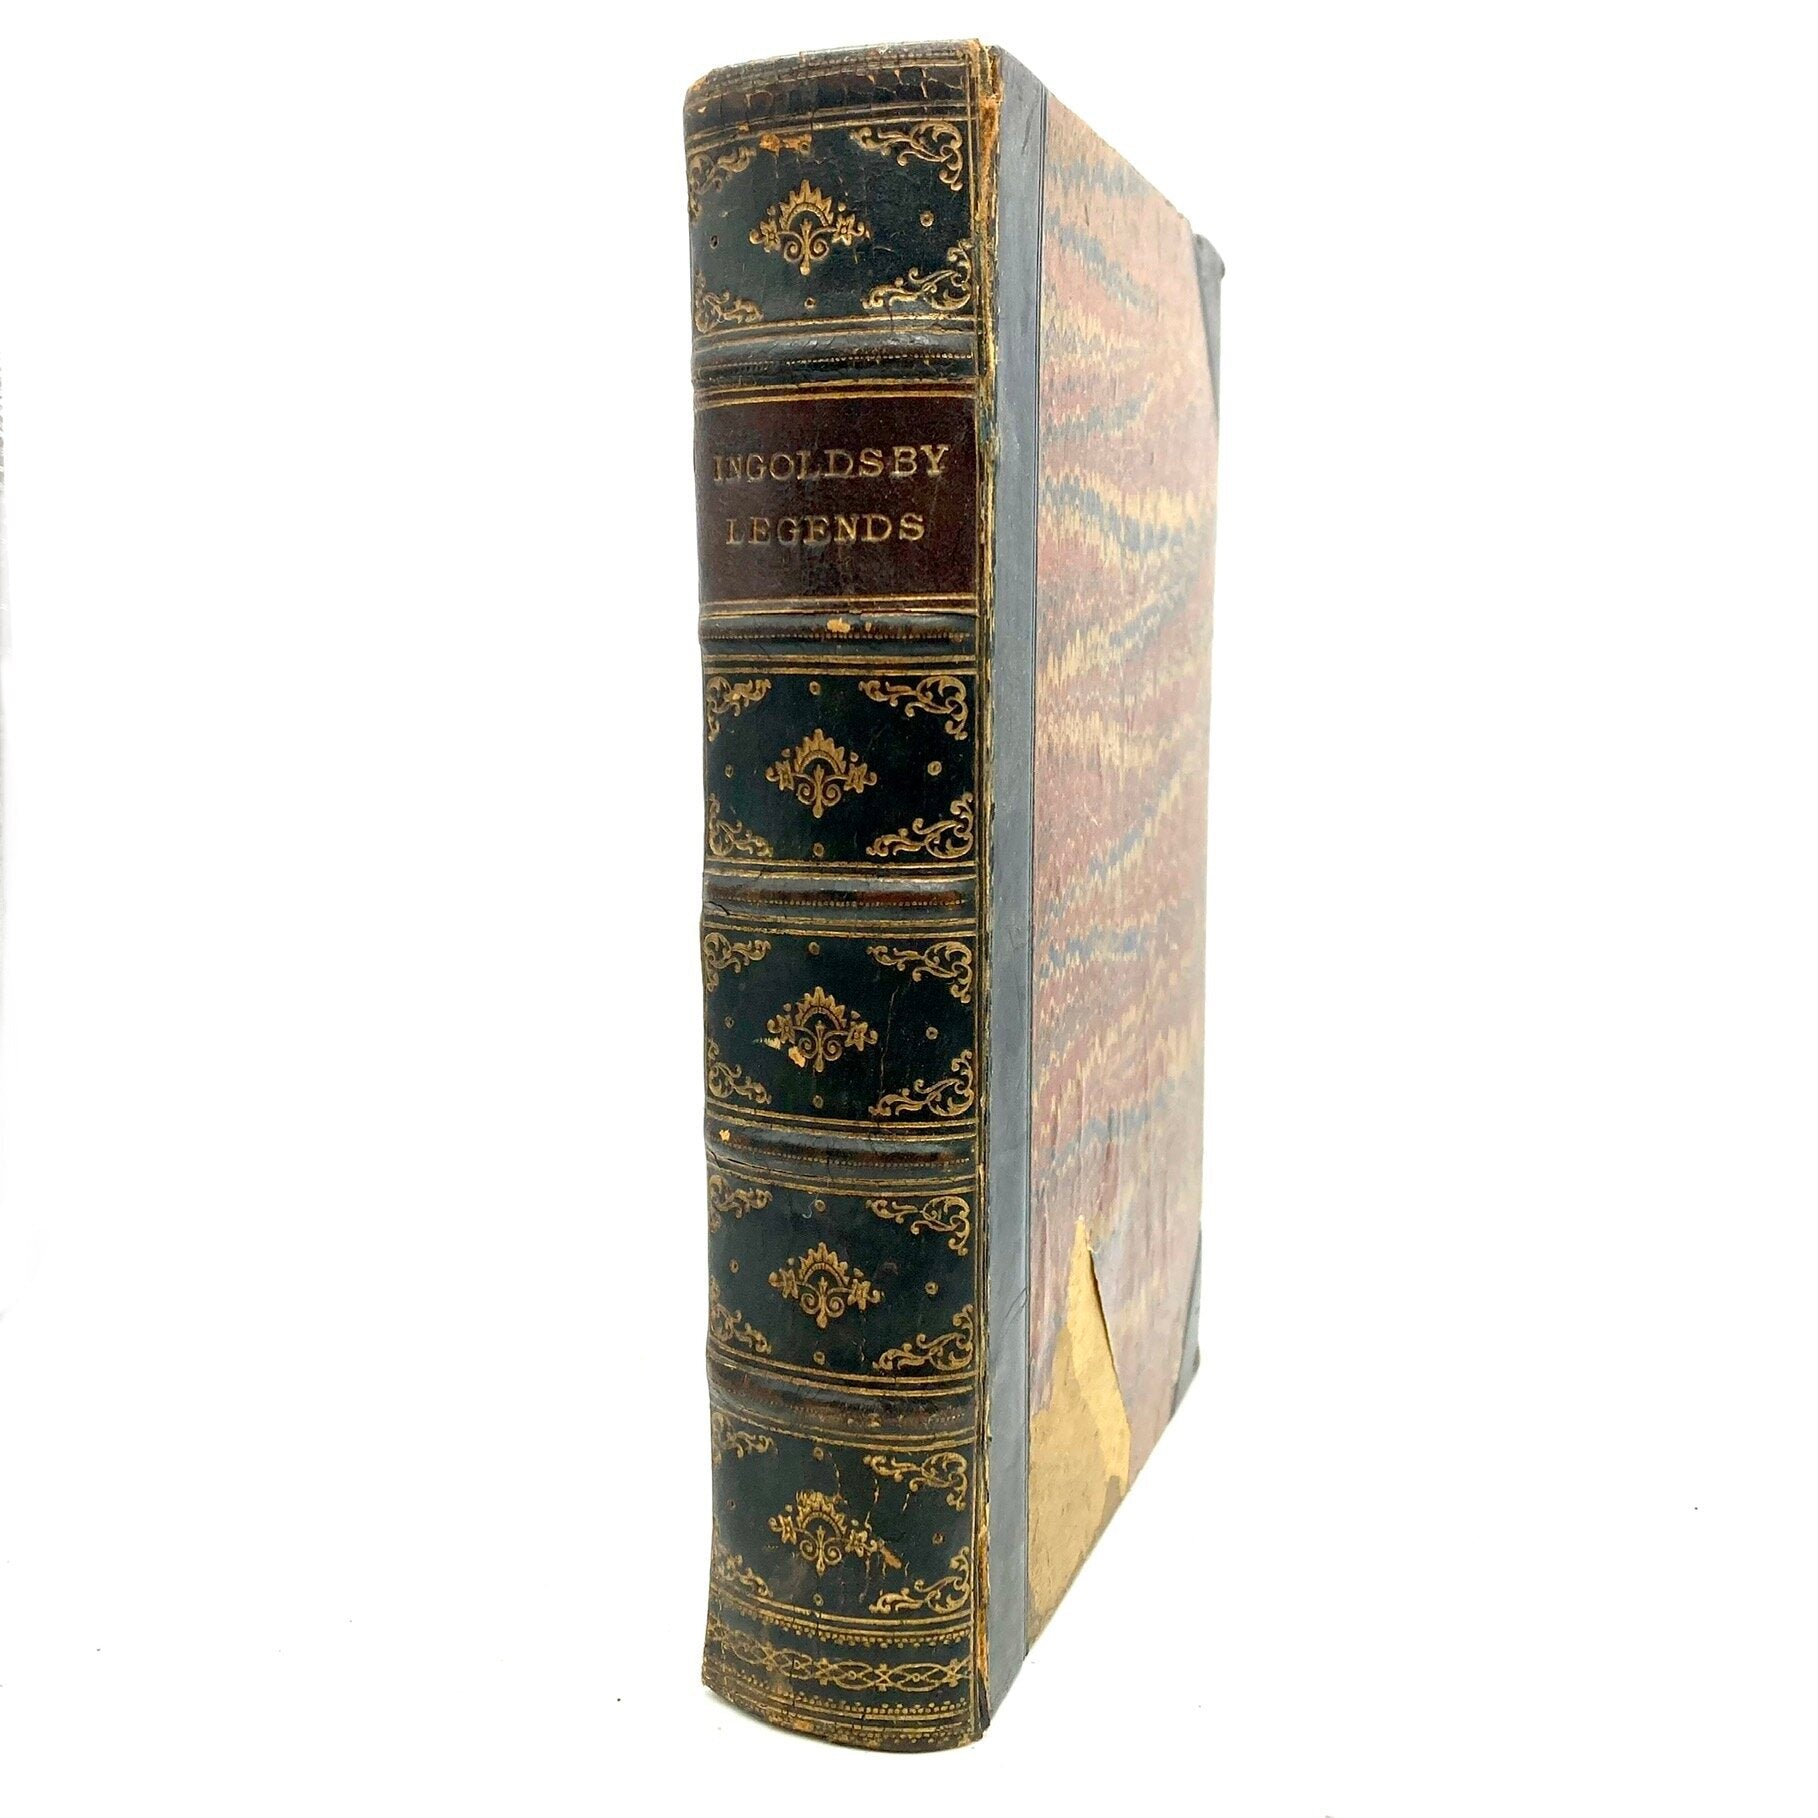 INGOLSDBY, Thomas "The Ingoldsby Legends" [Richard Bentley, 1870] - Buzz Bookstore